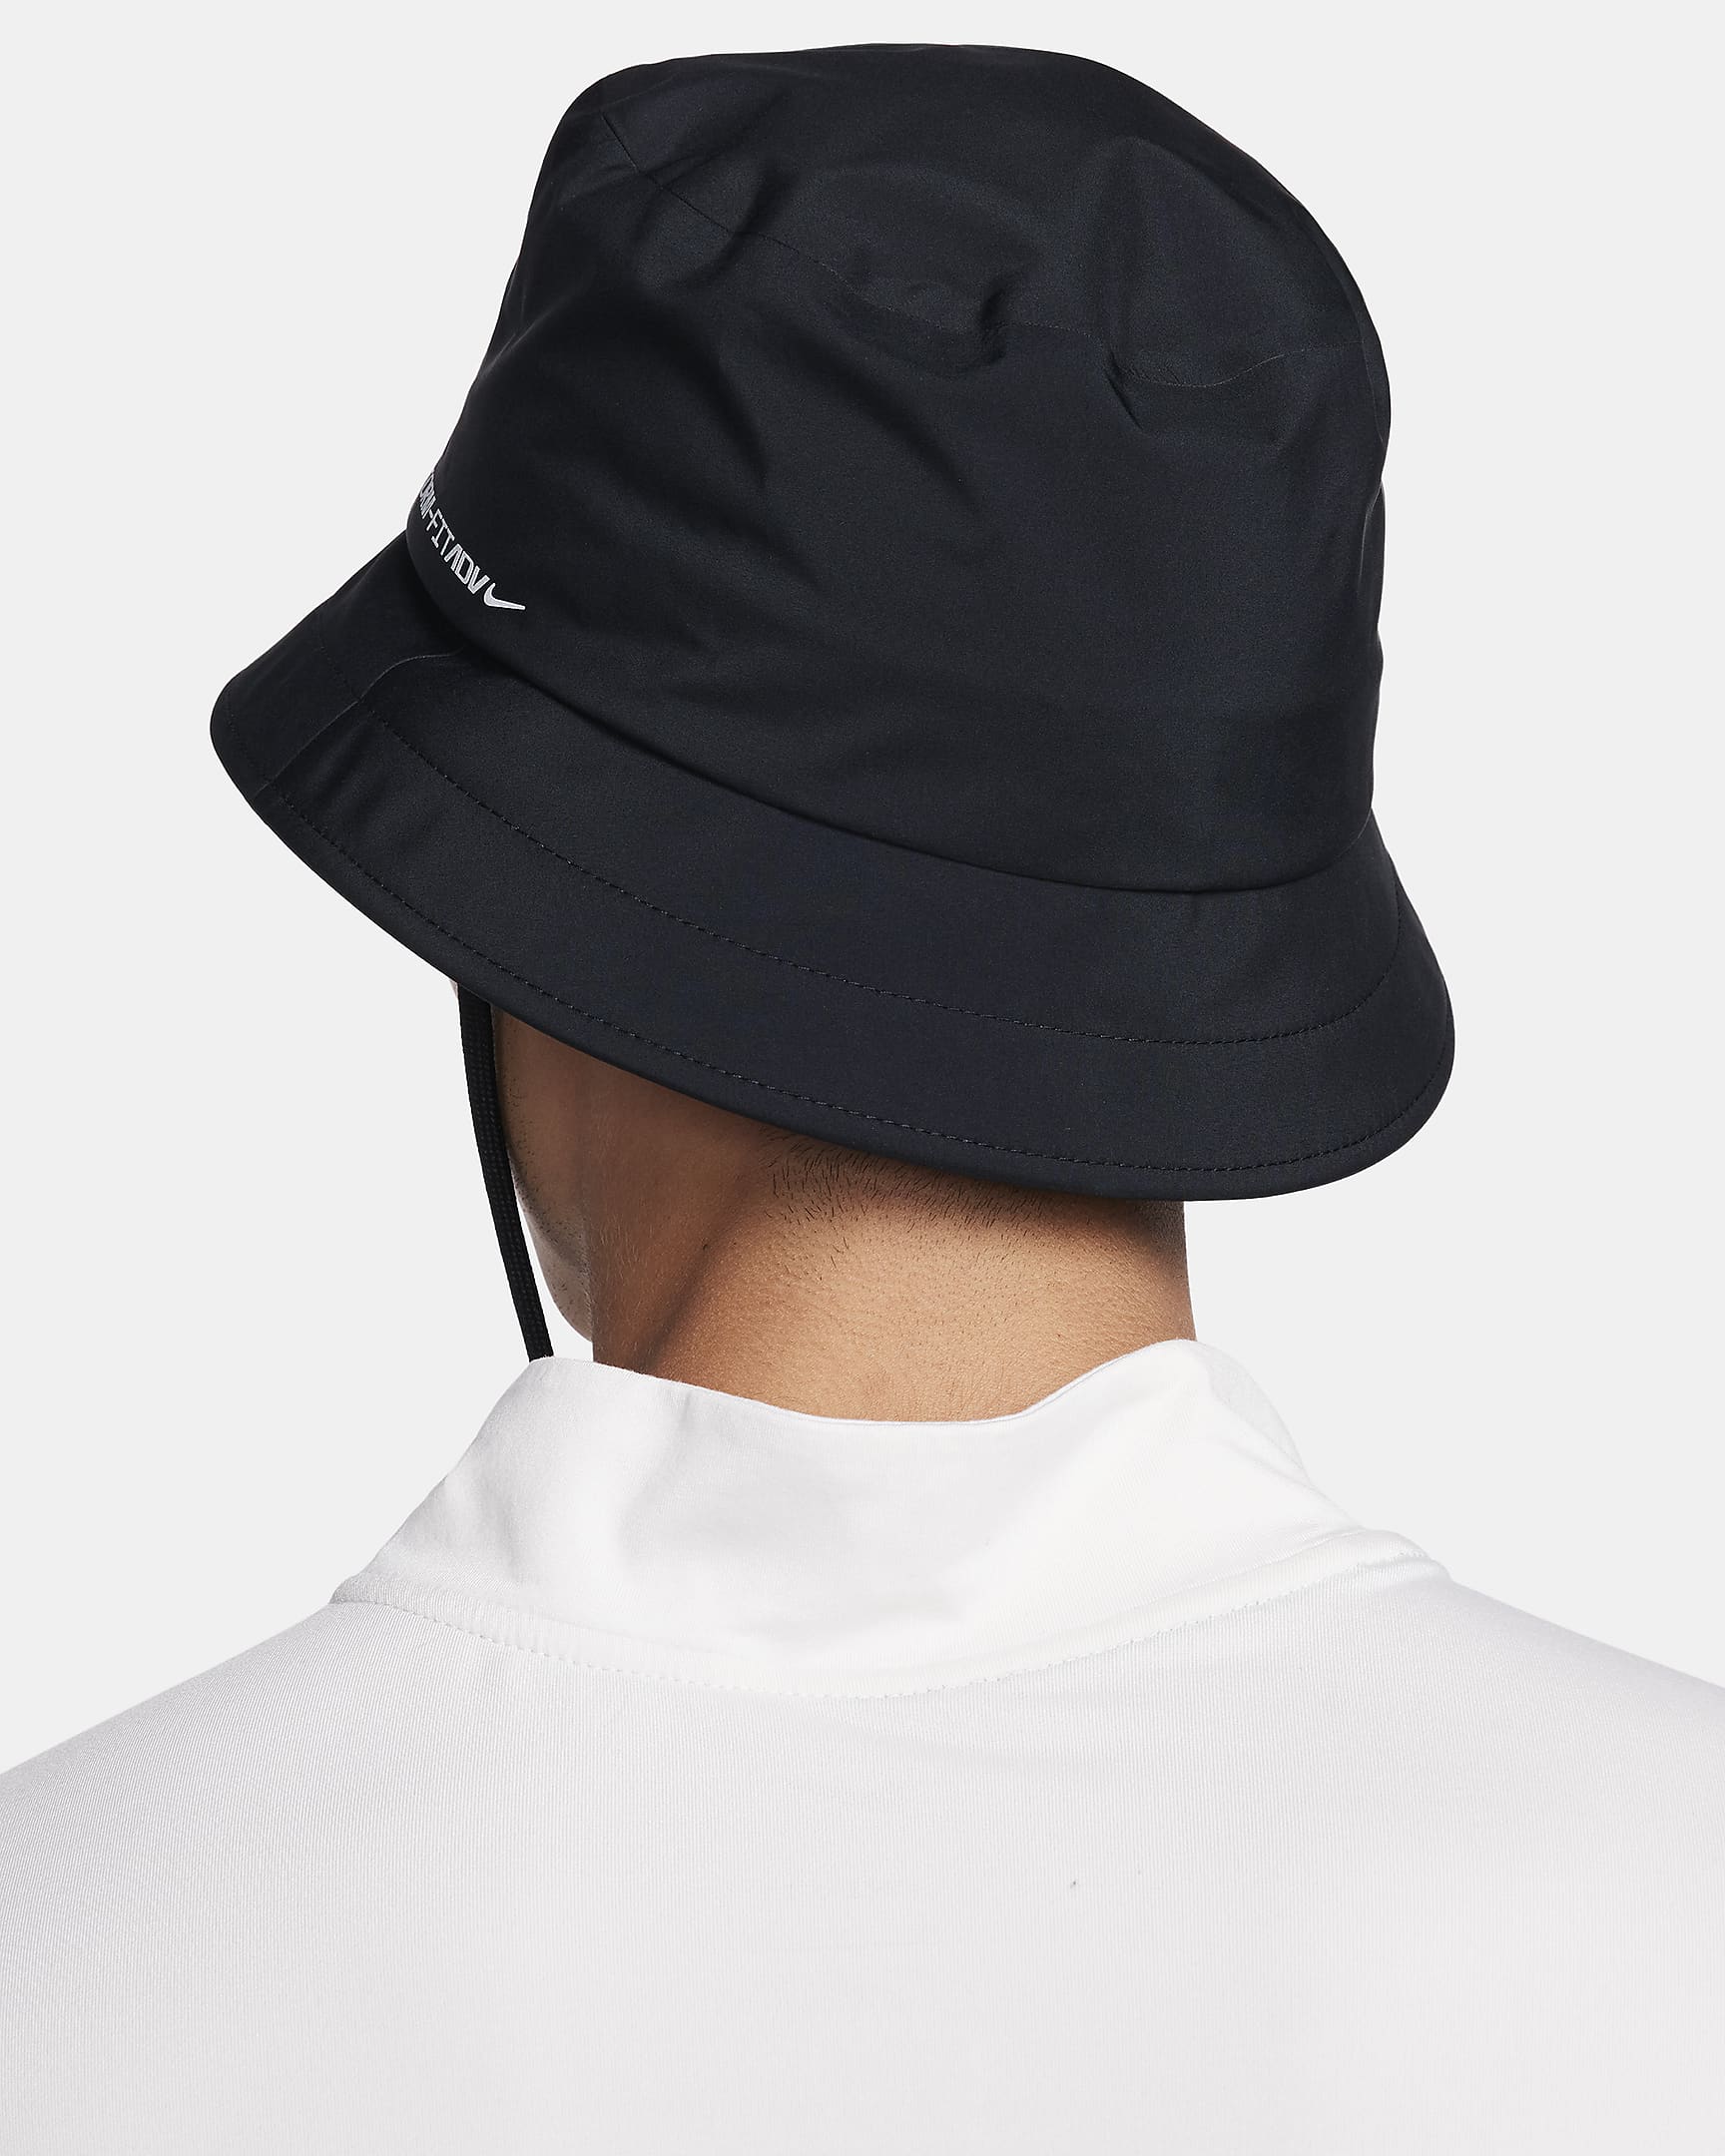 Nike Storm-FIT ADV Apex Bucket Hat - Black/Anthracite